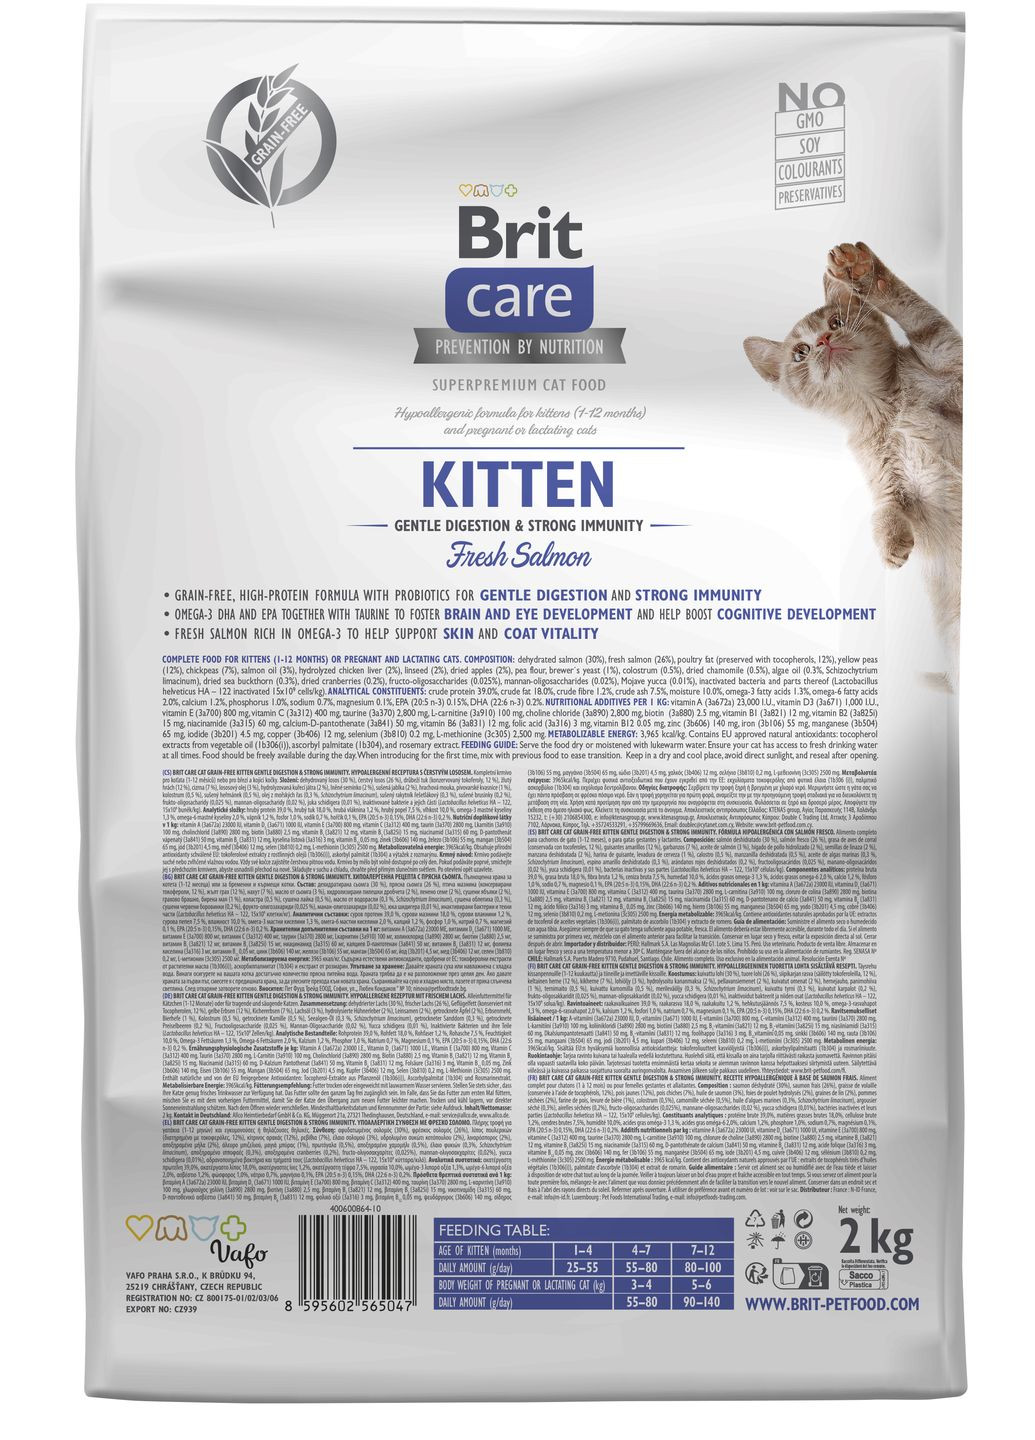 Сухой корм для котят Cat GF Kitten Gentle Digestion Strong Immunity с лососем, 2 кг Brit Care (260949410)